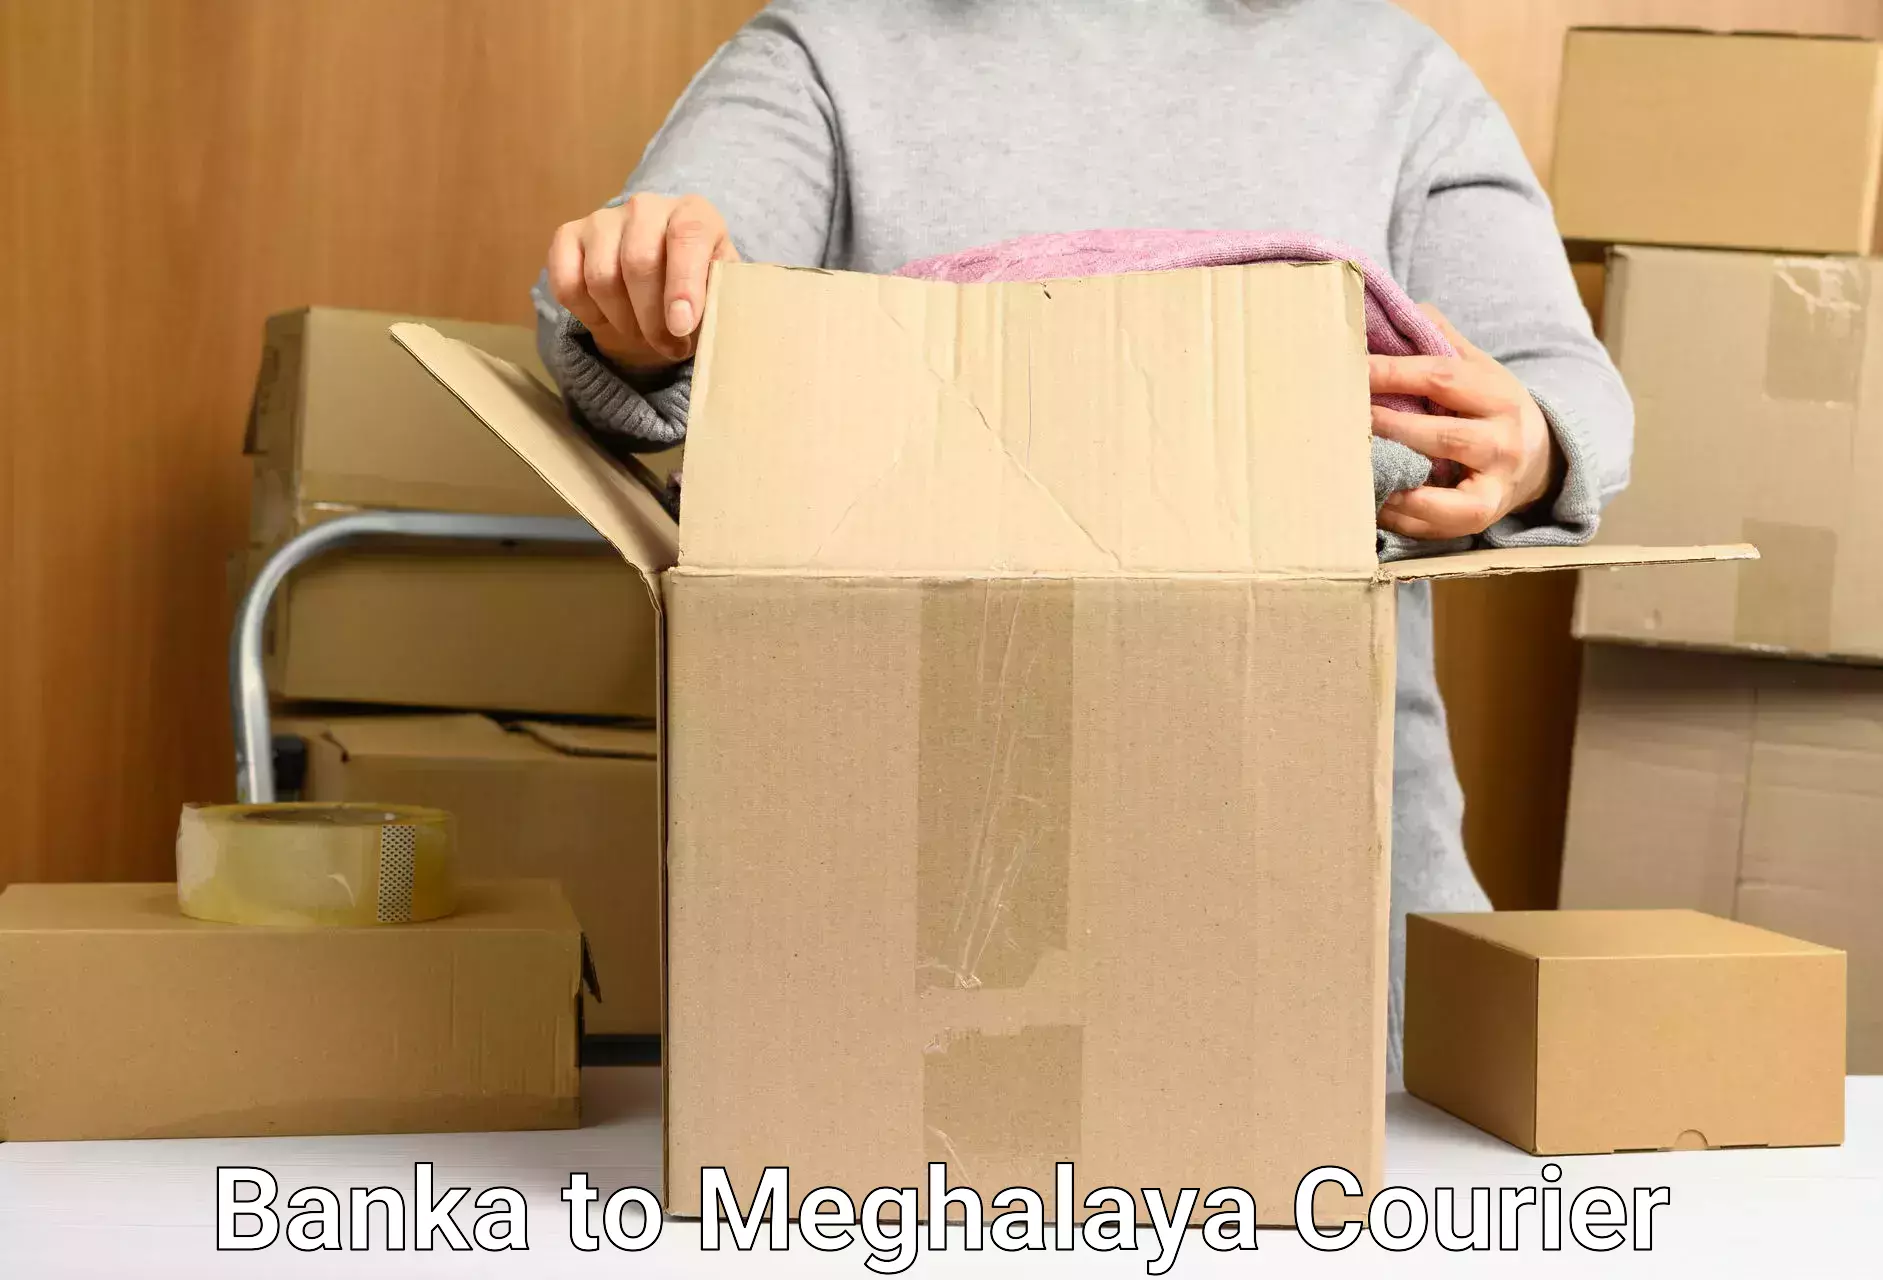 Courier service innovation Banka to Meghalaya